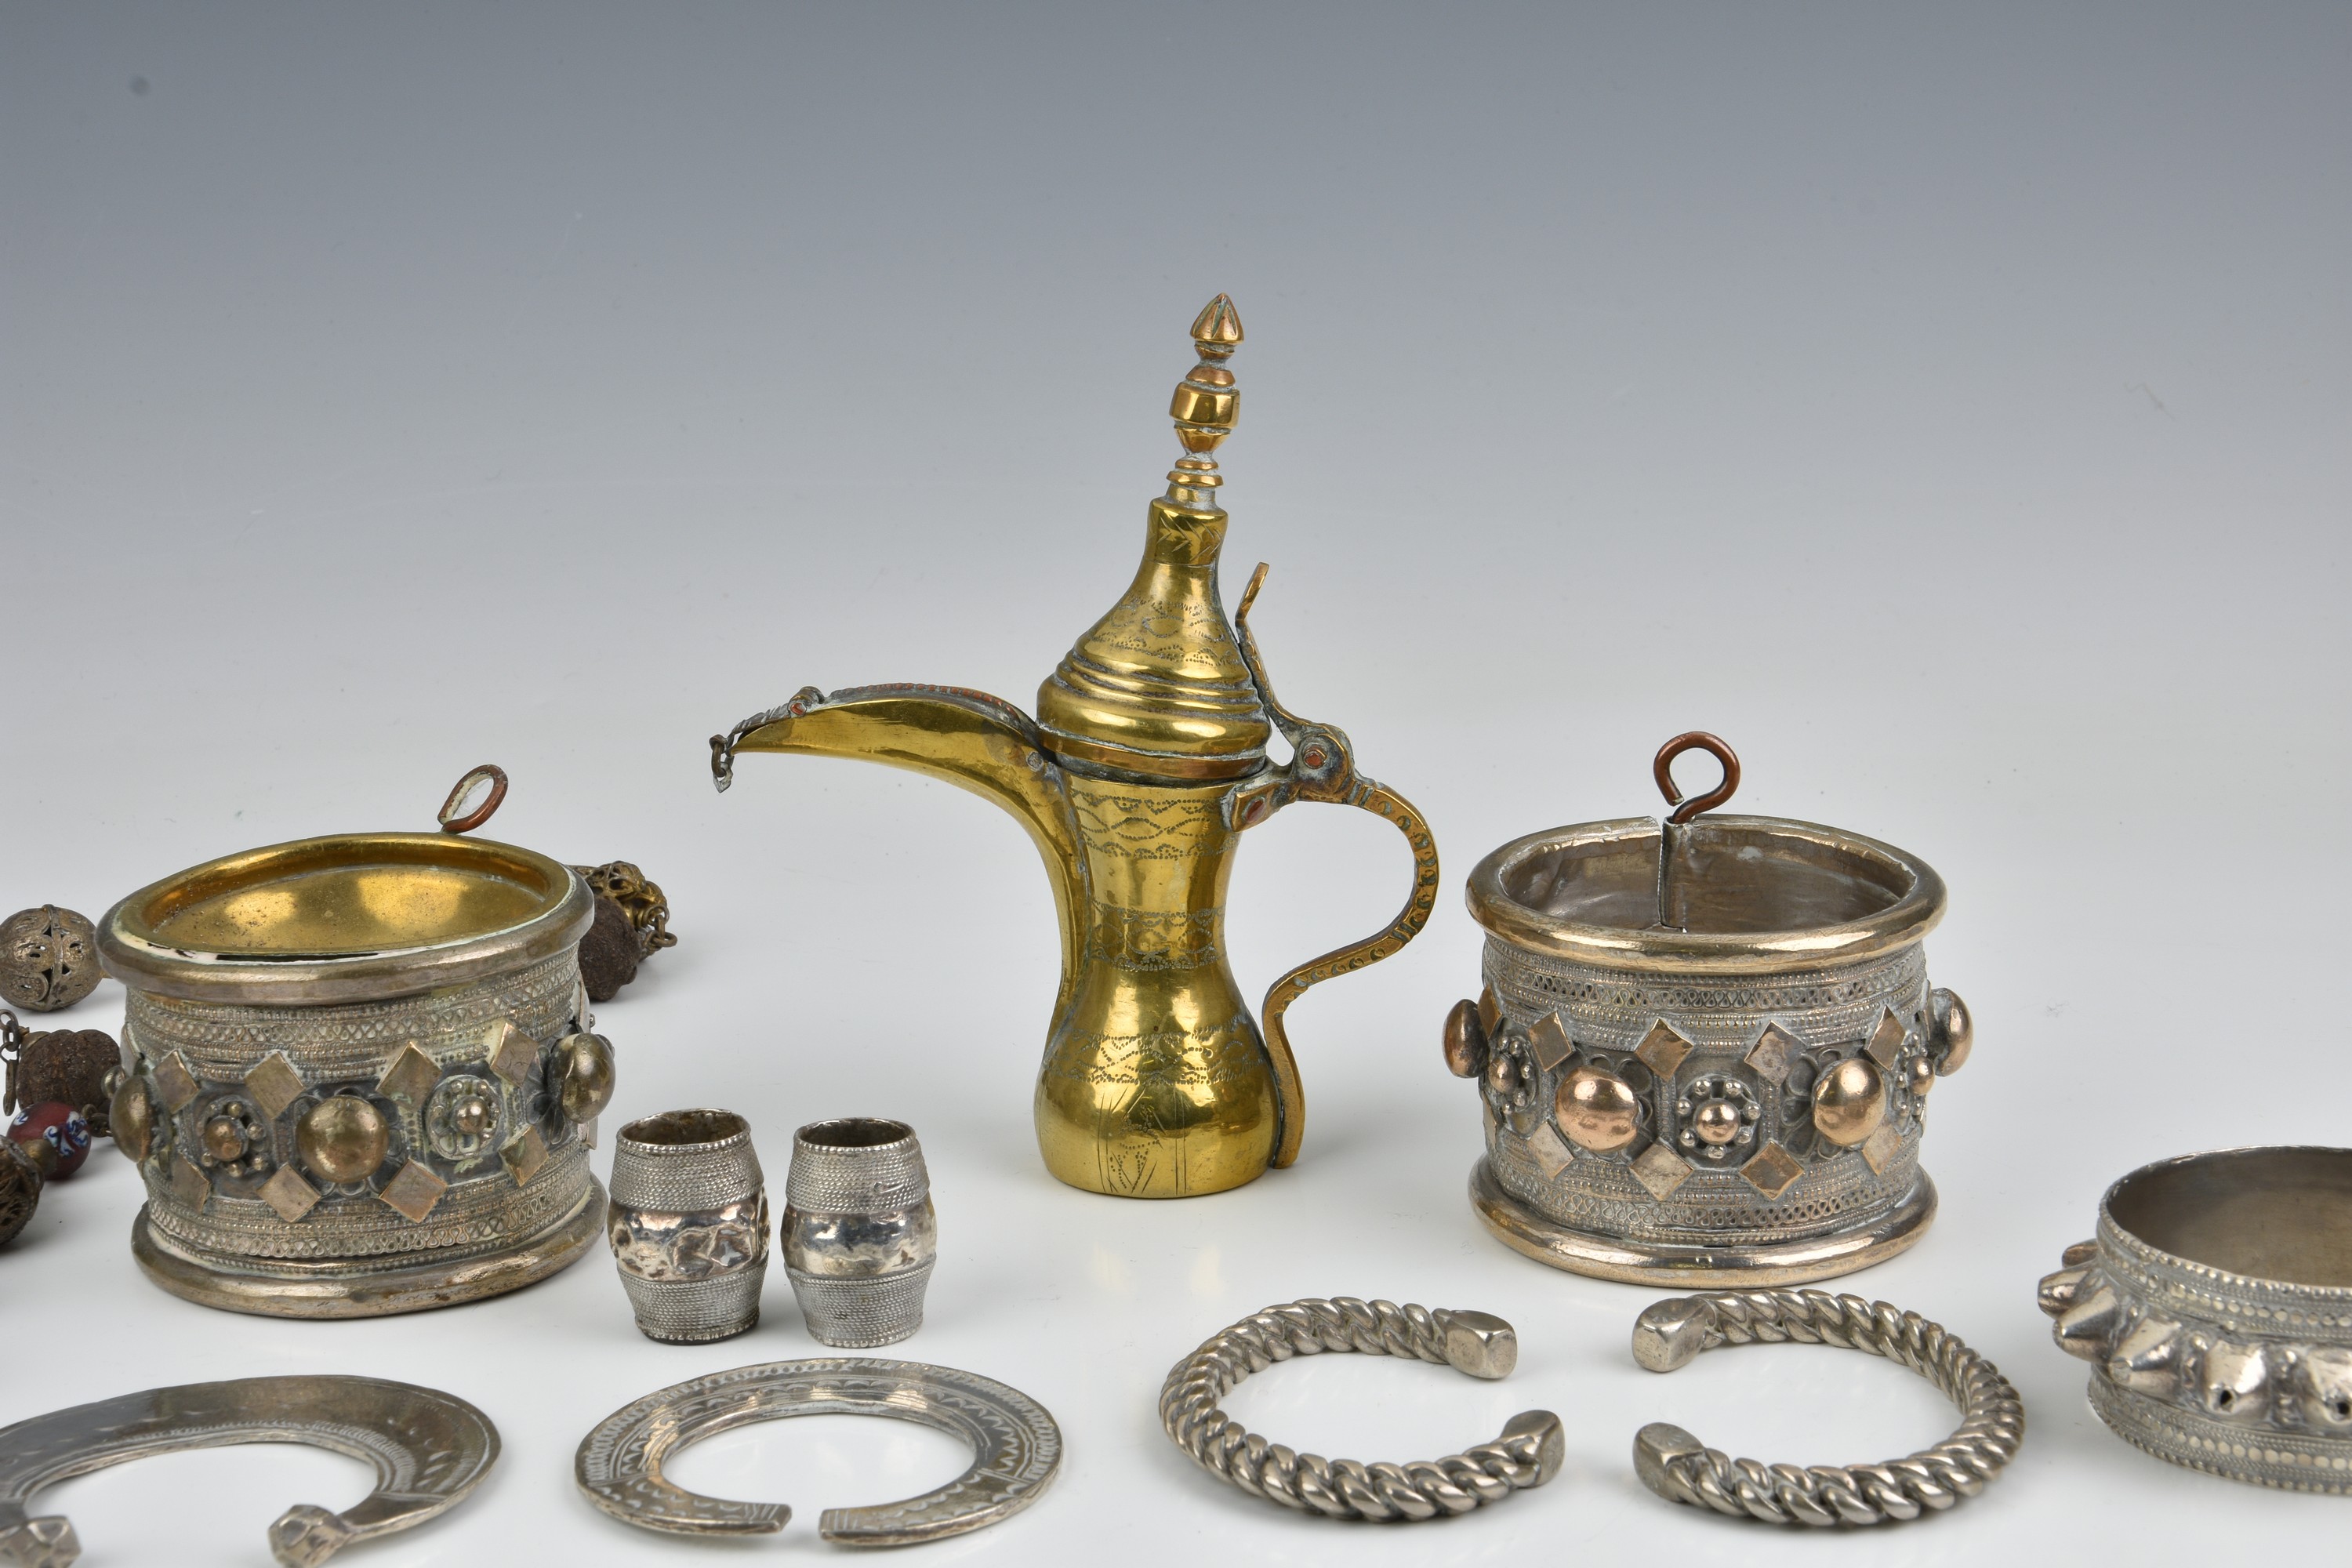 Middle-Eastern Tribal / Yemen / Oman / Bedouin white metal & bronze jewellery and artefacts, - Image 2 of 2